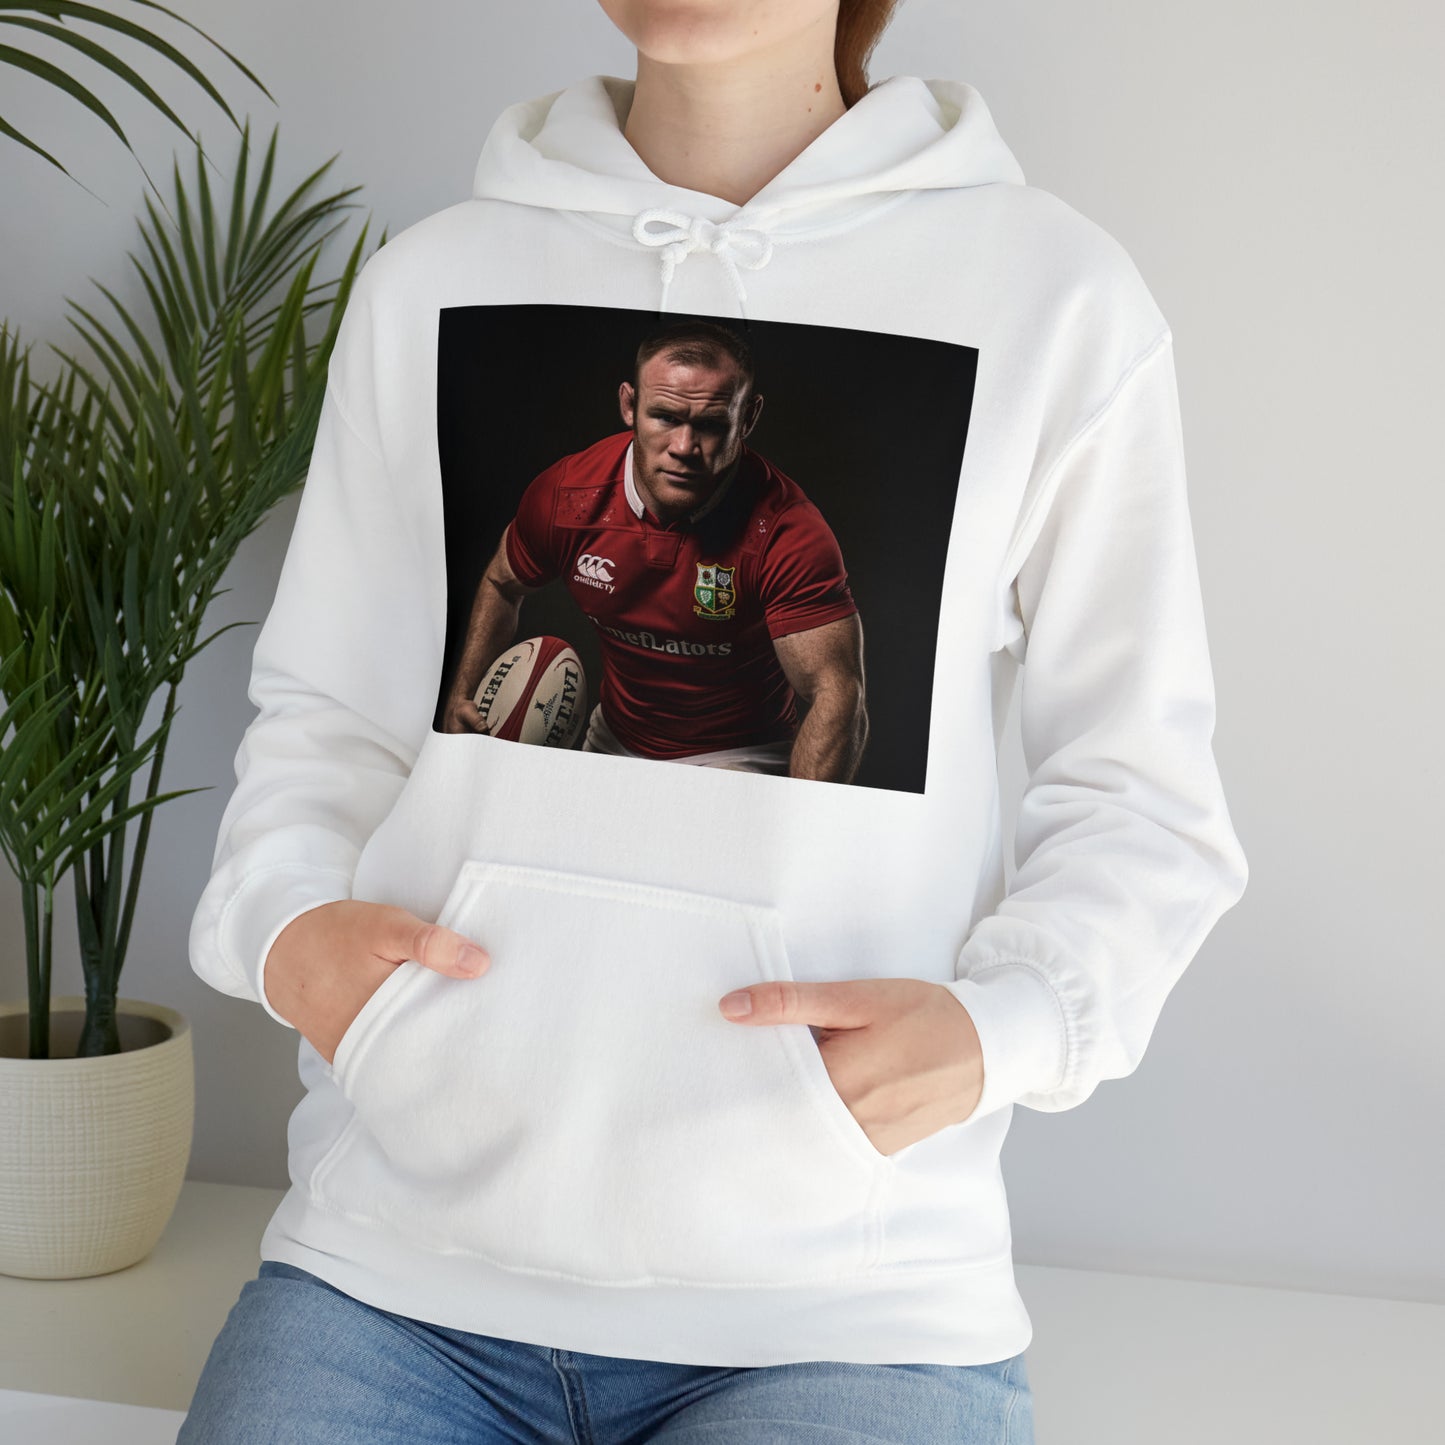 Ready Rooney - light hoodies